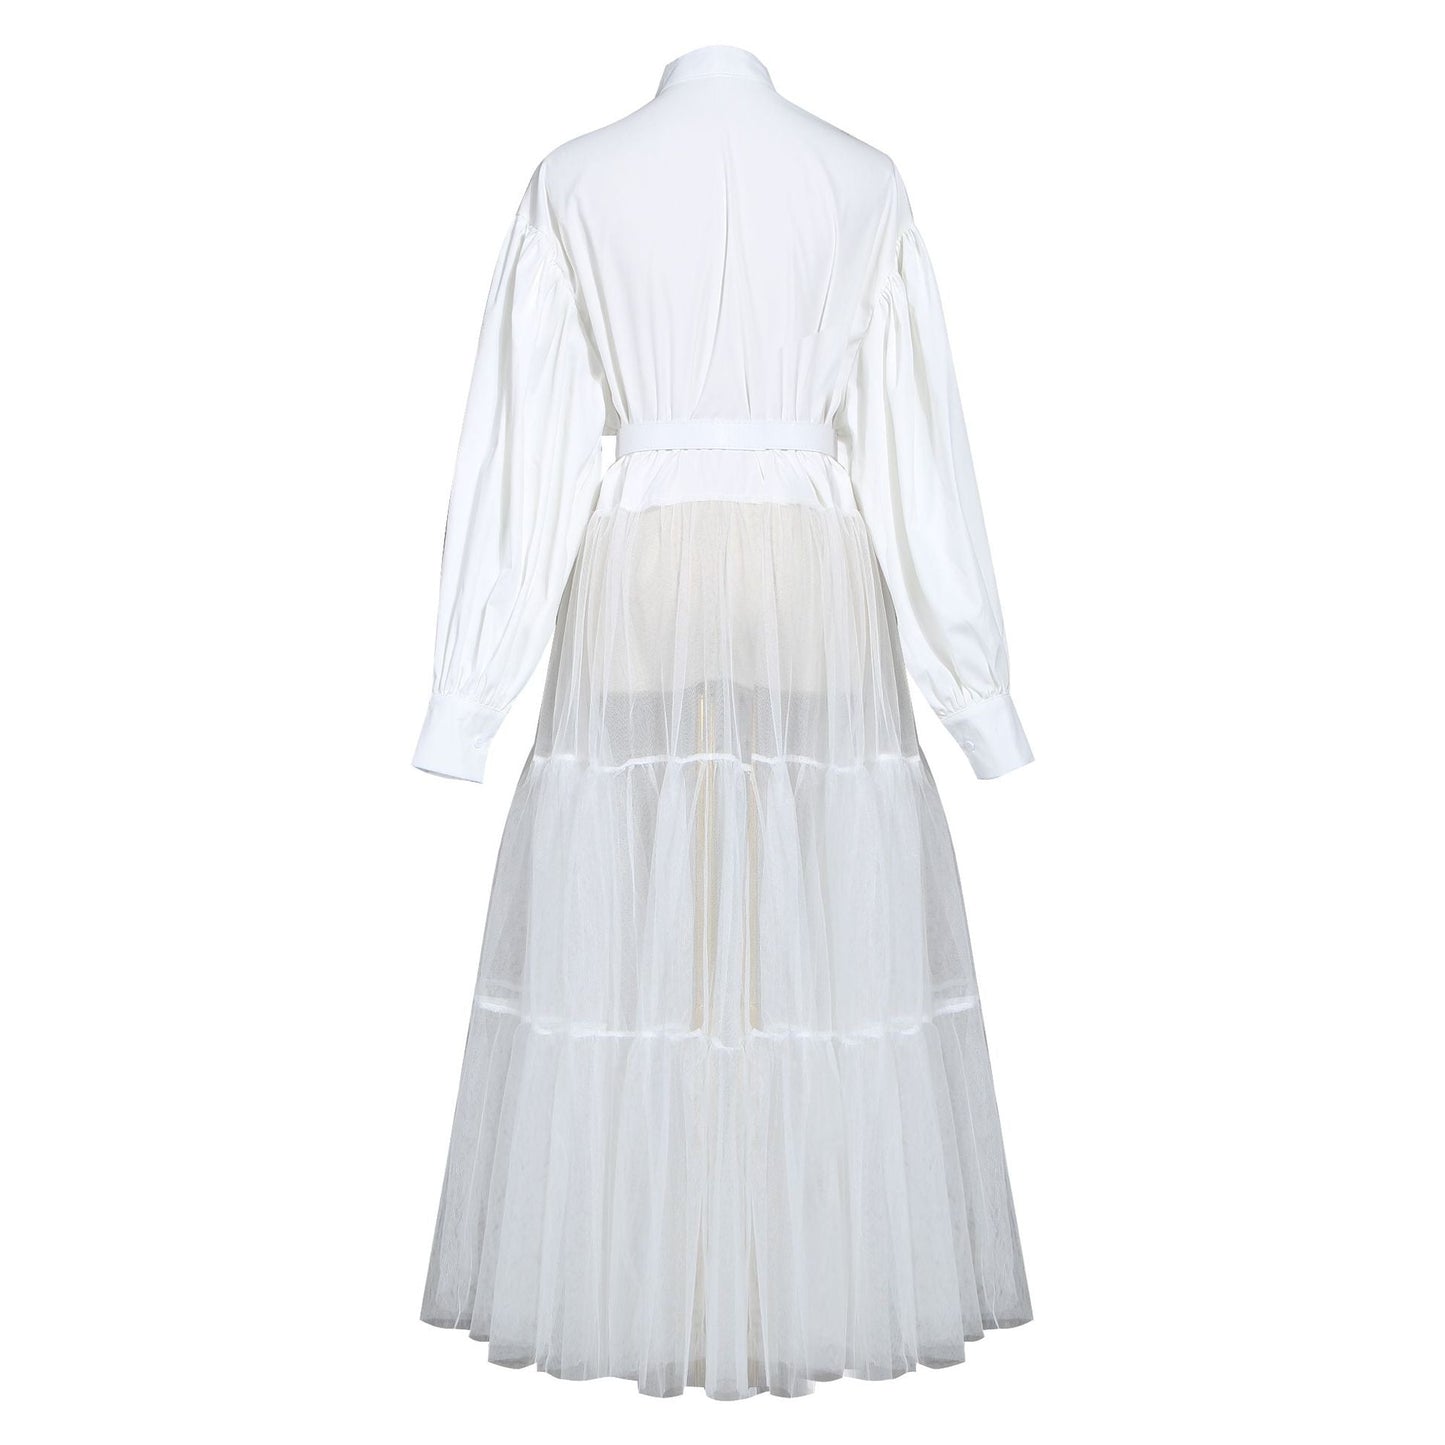 Designed Tulle Constract High Waist Women Long Shirt Dresses